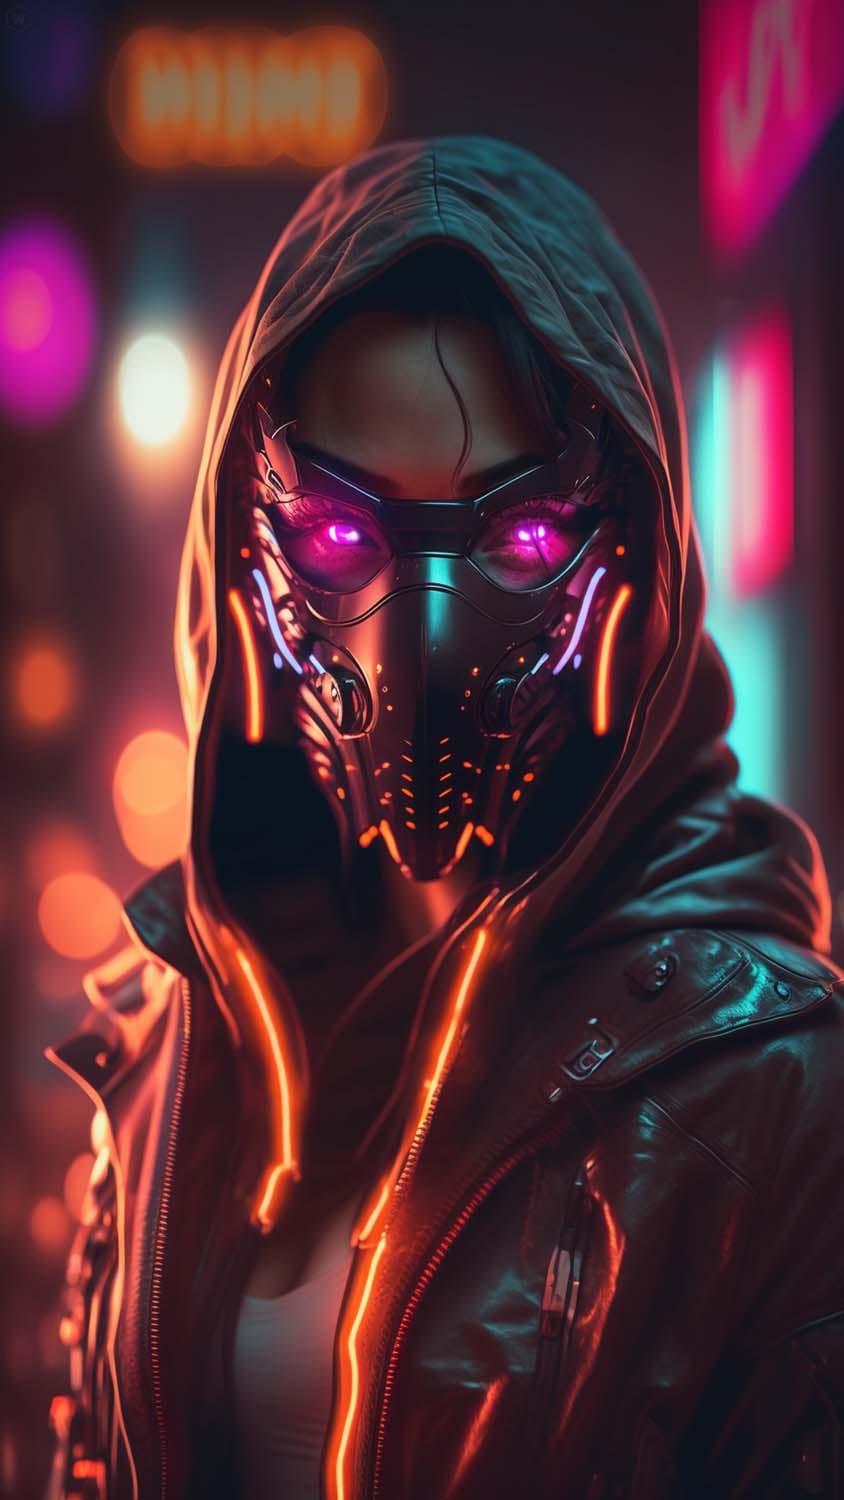 Cyborg Mask Hoodie Girl